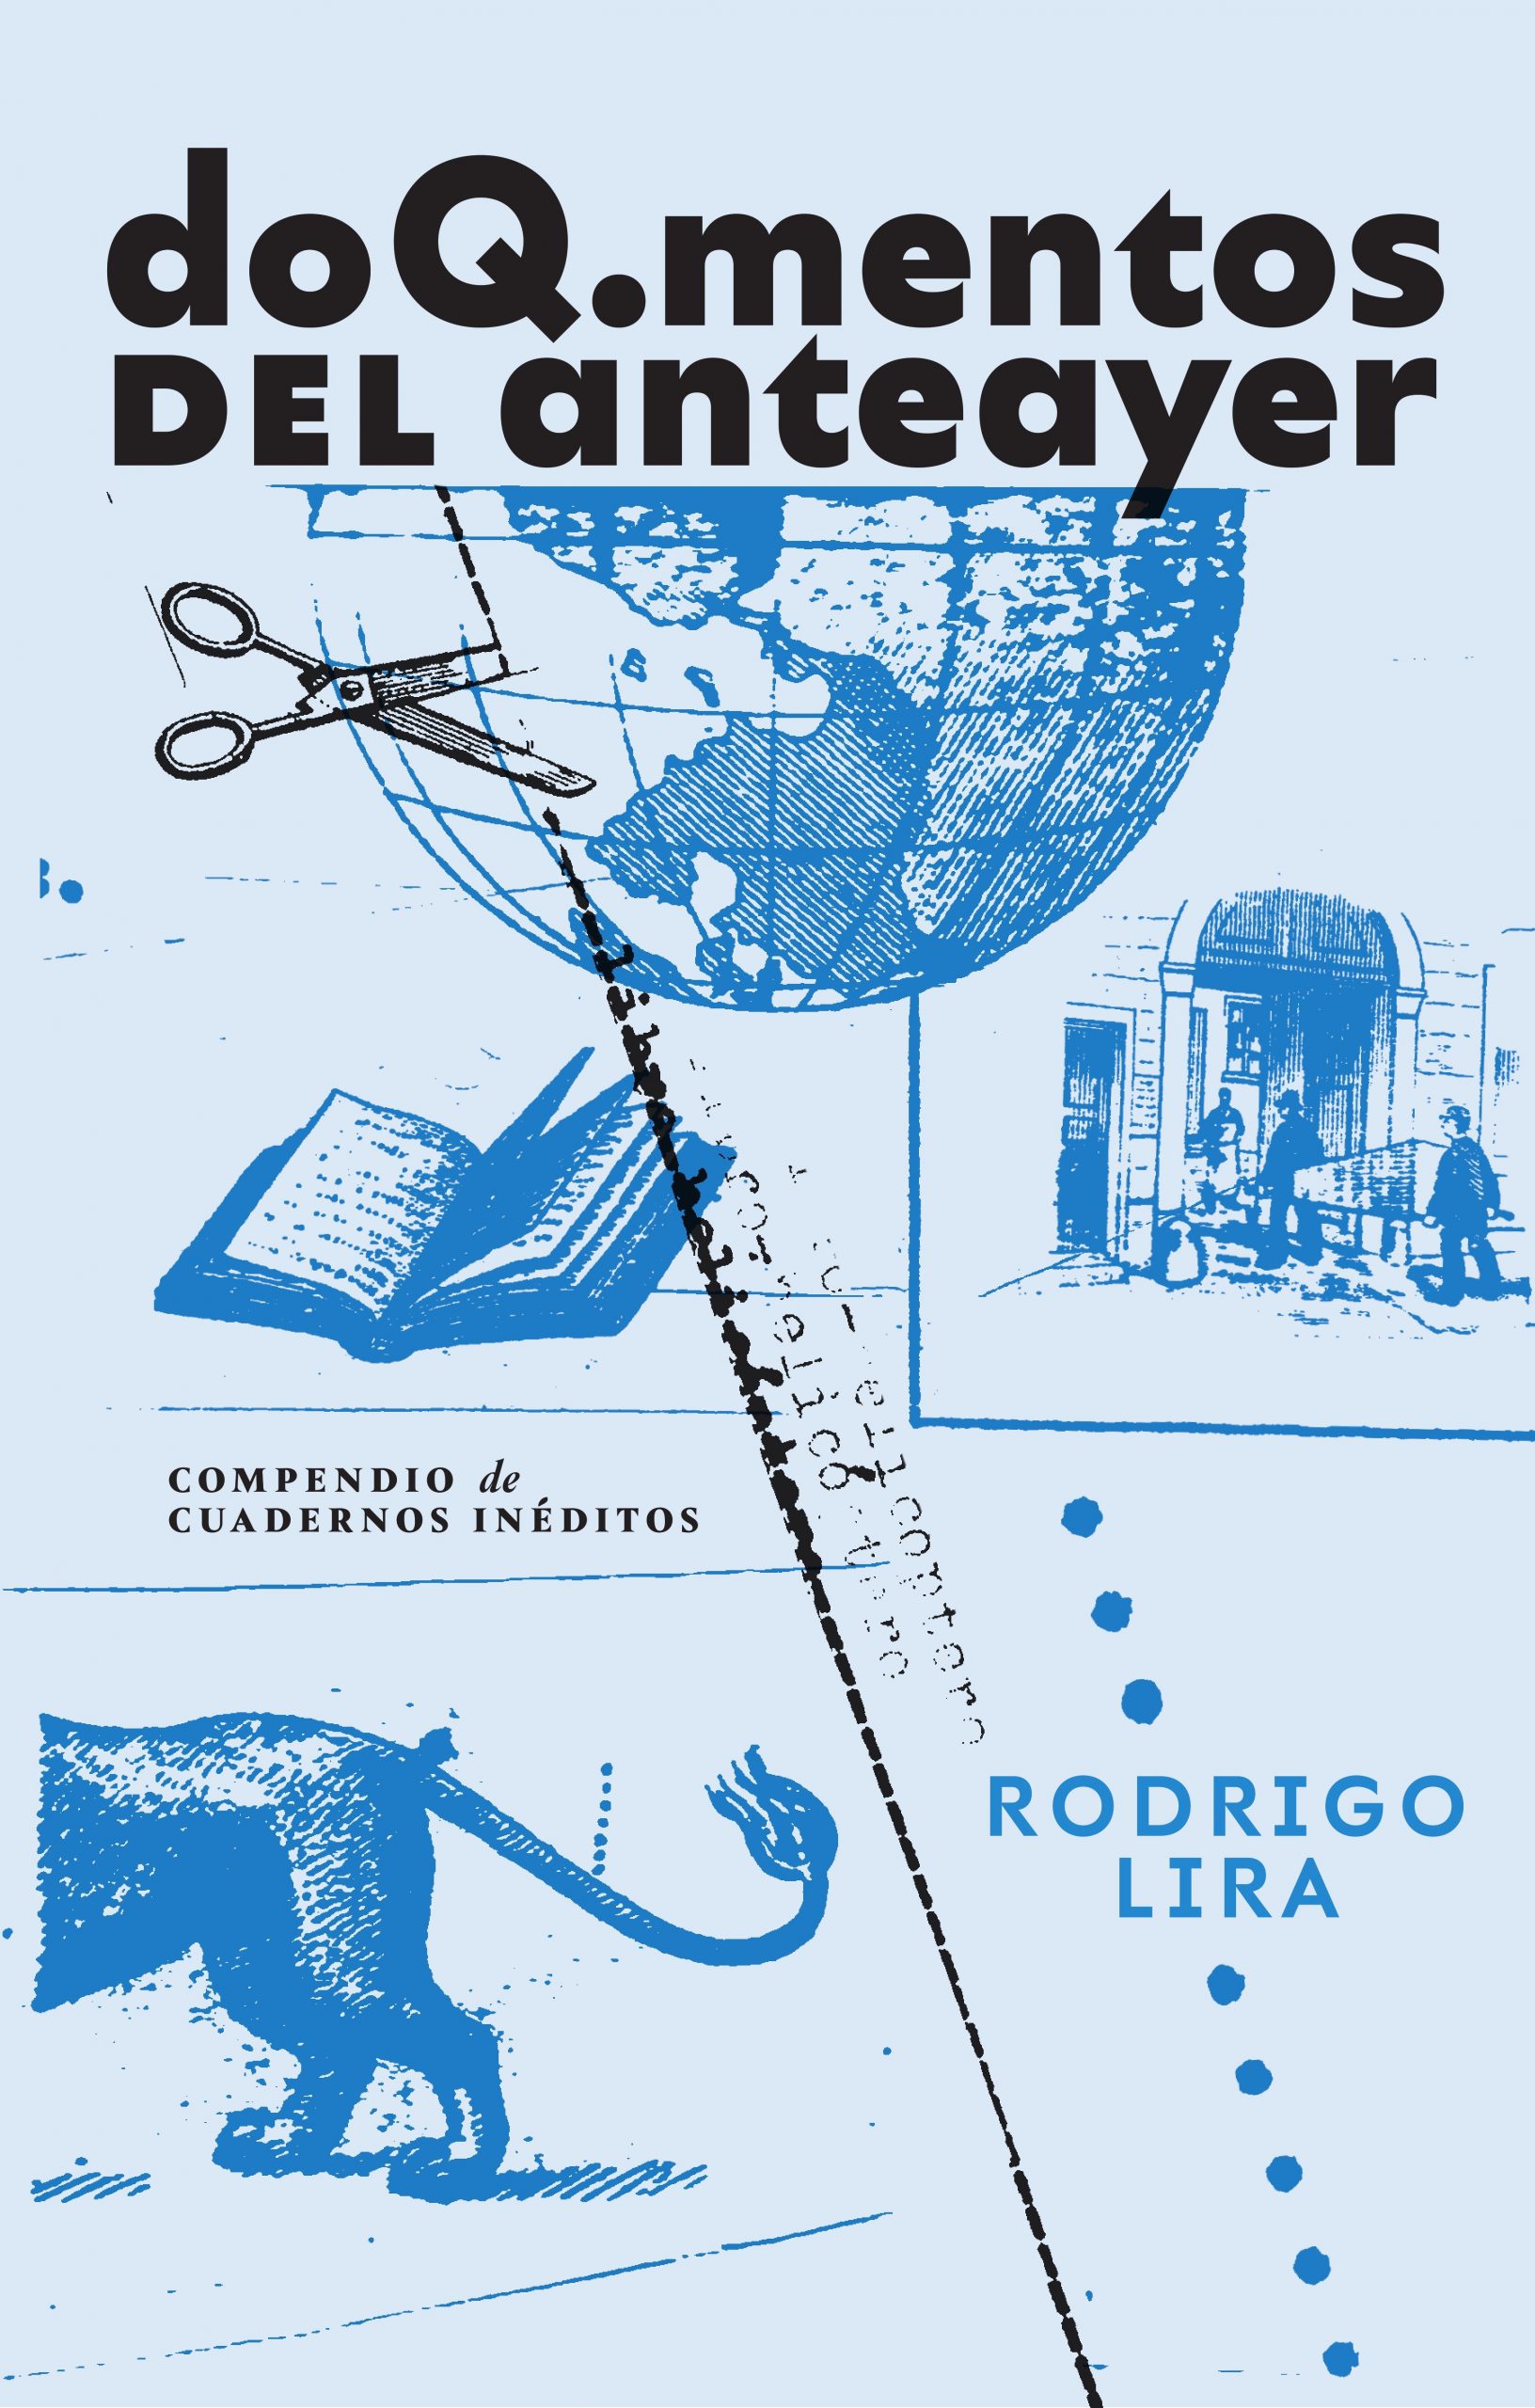 doQ.mentos del anteayer, cuadernos de Rodrigo Lira